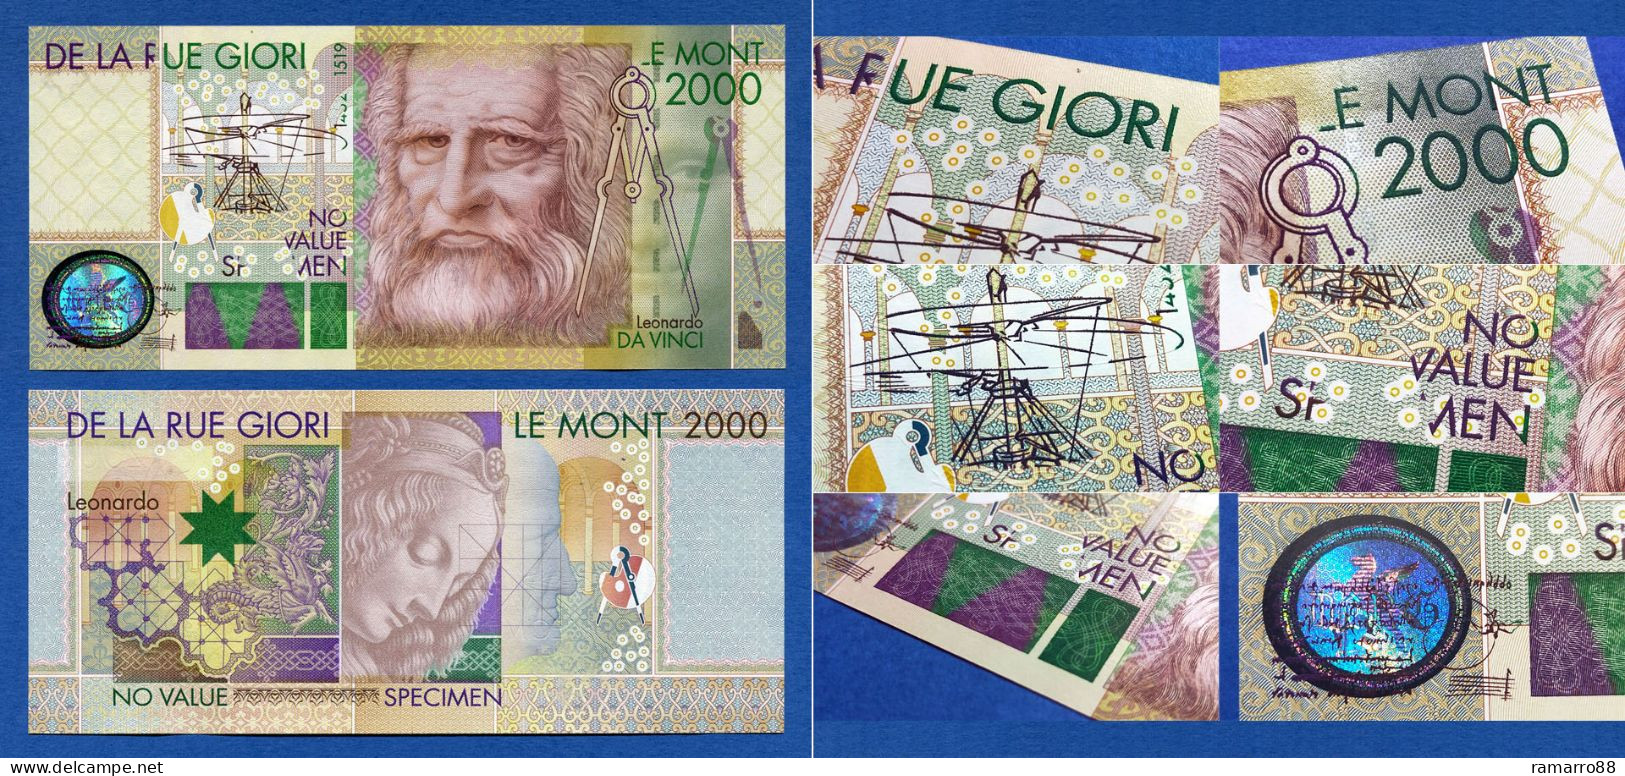 De La Rue / KBA Giori - Set of 9 Different Types of Leonardo Da Vinci Specimen Test Notes